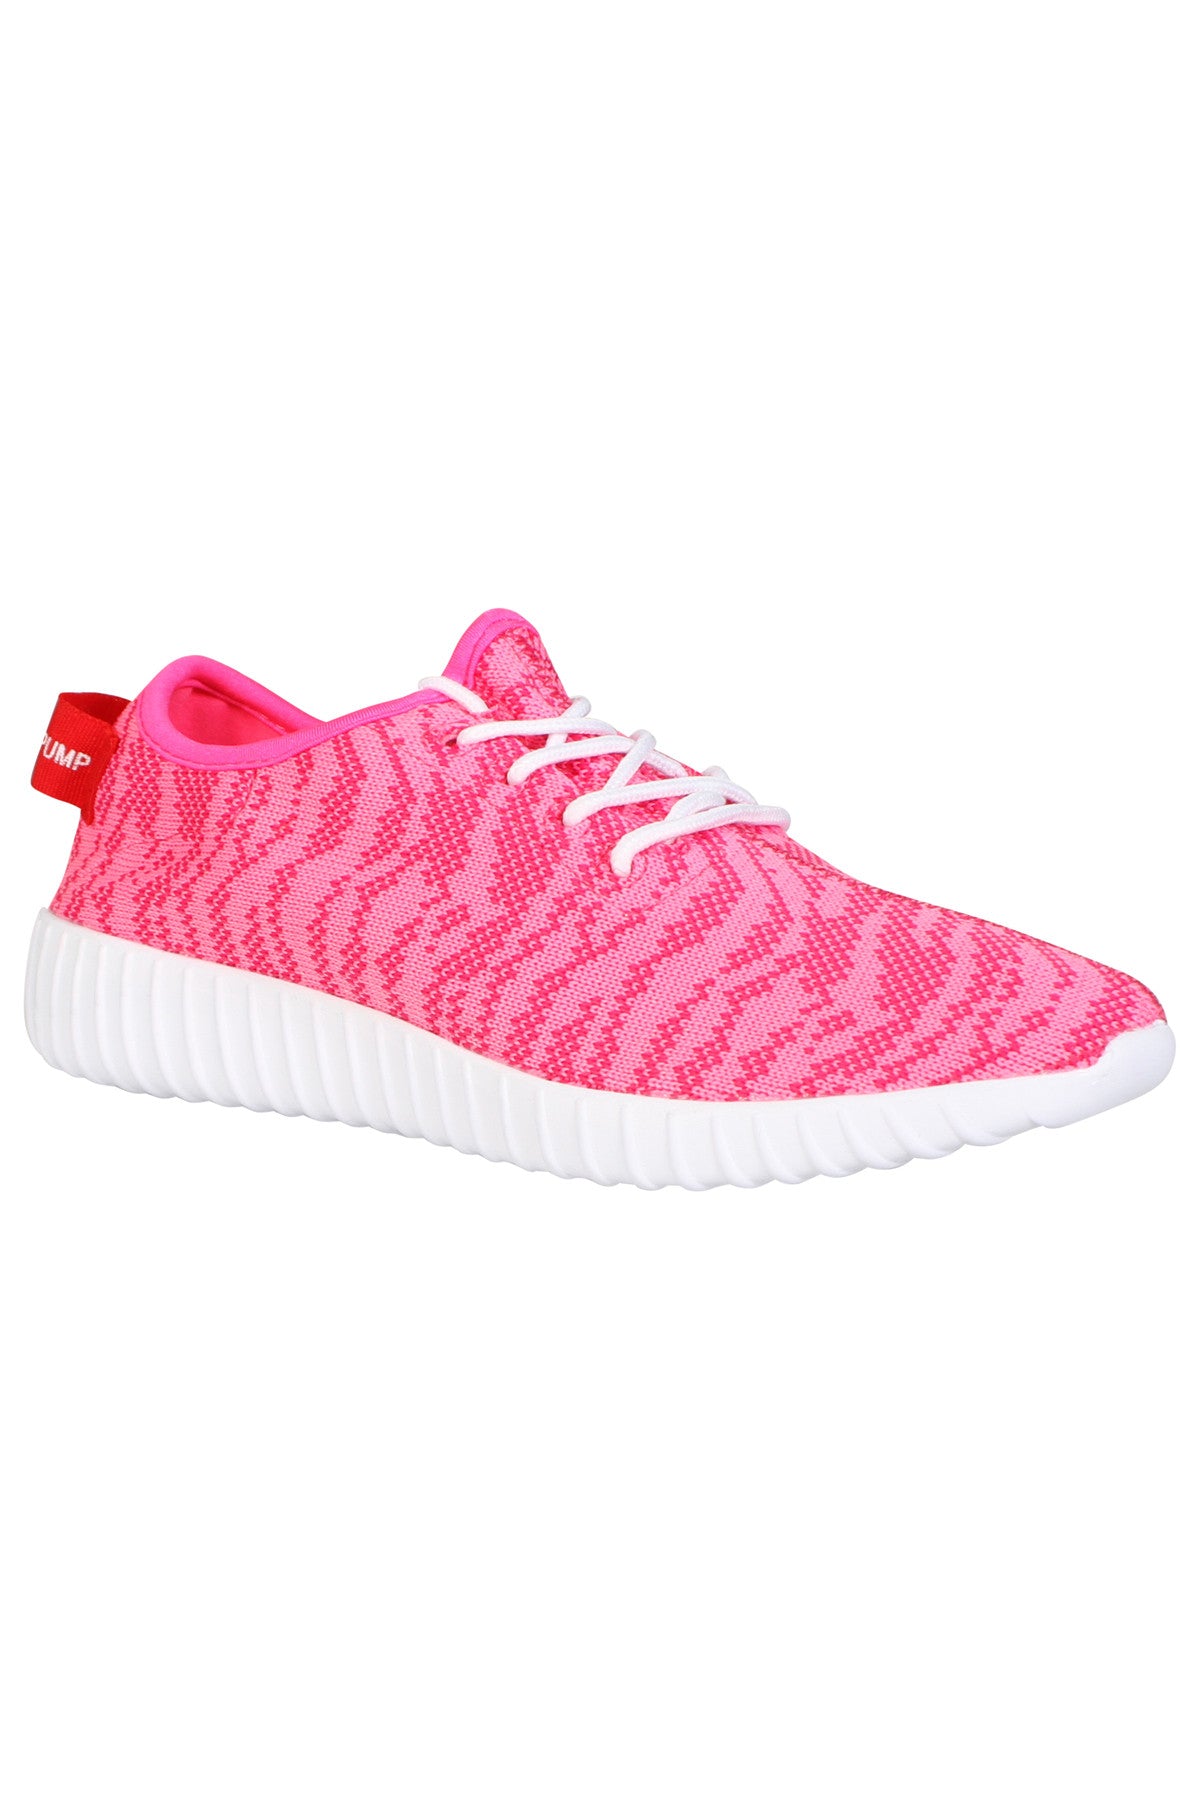 Waffle Pump Womens Pink EEZY Sneakers